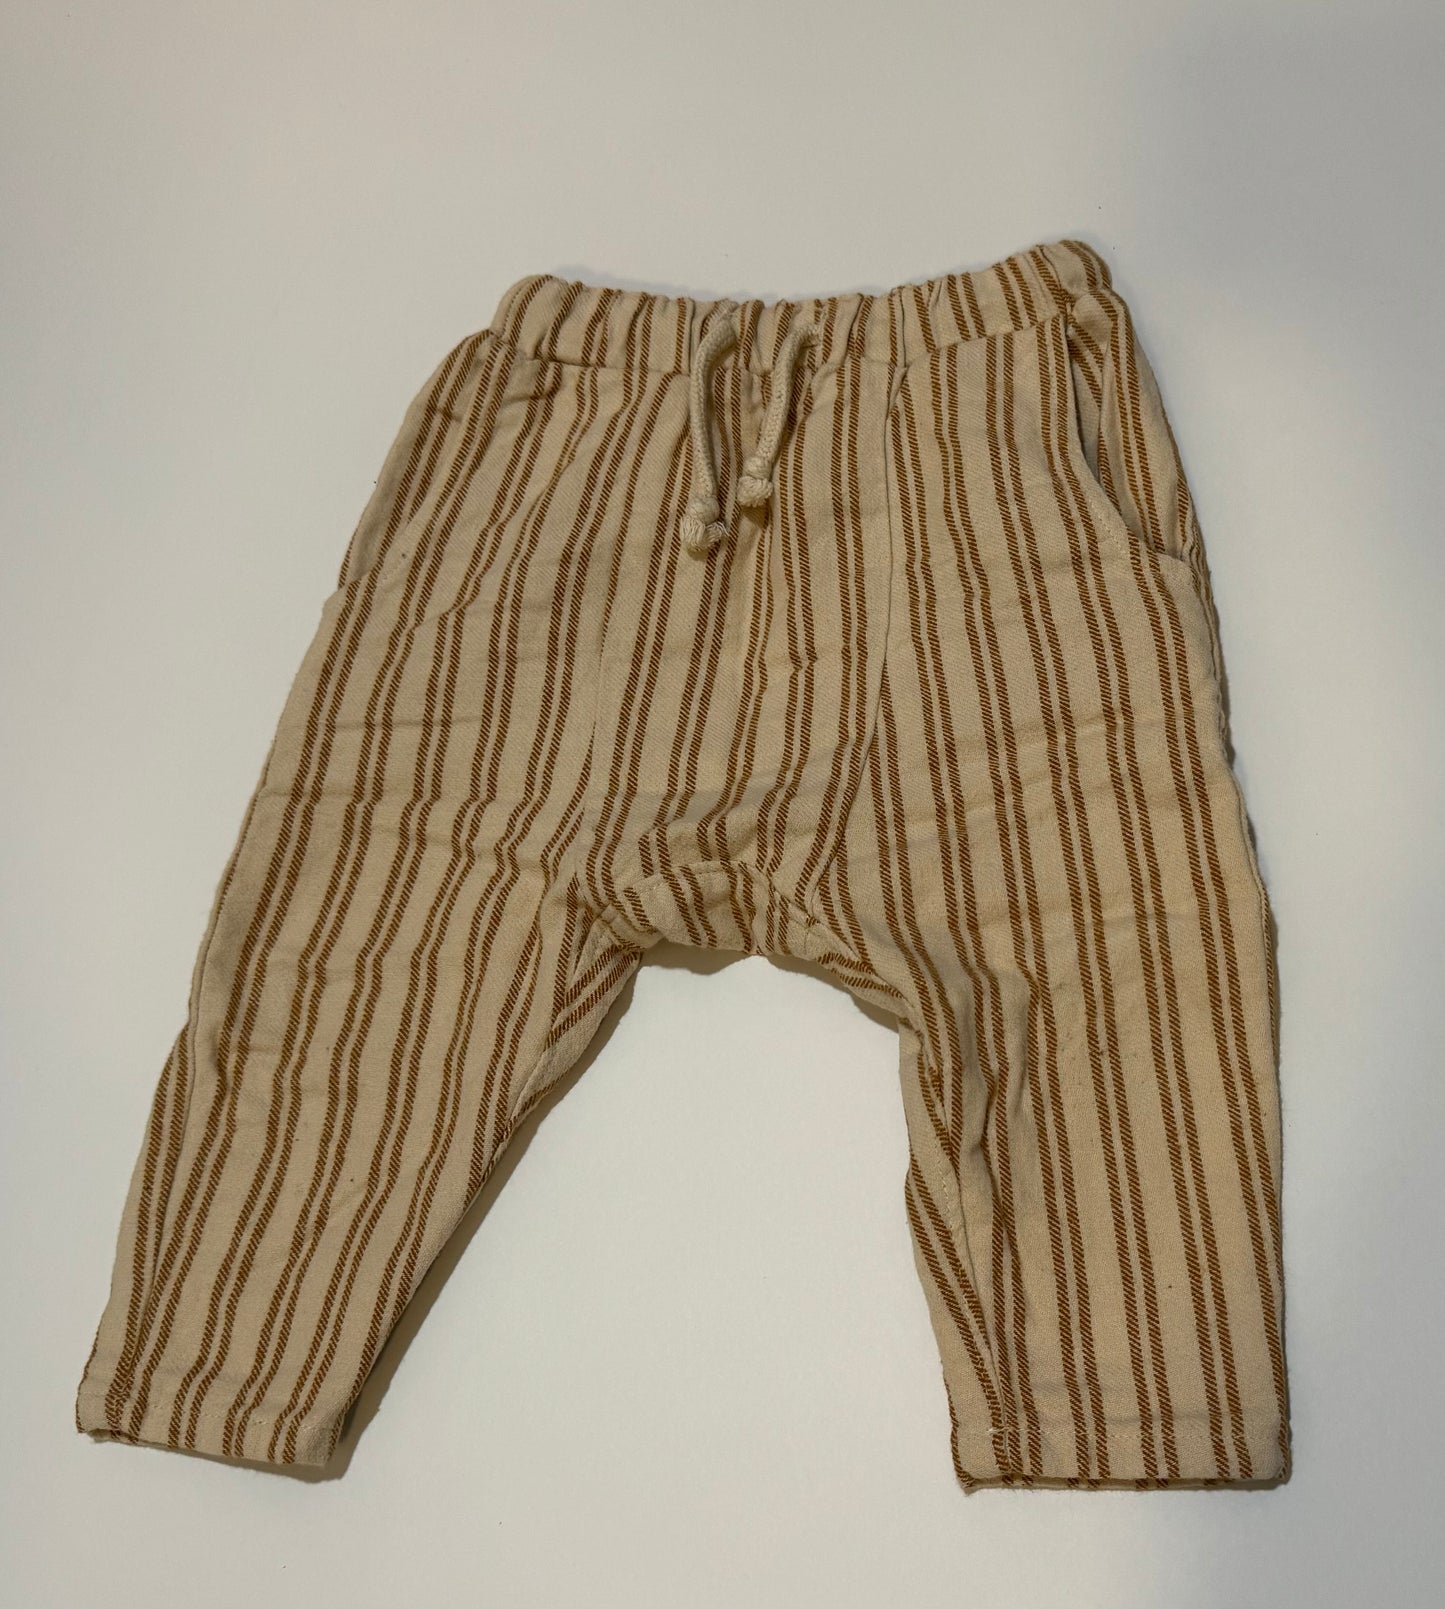 6-12 months Boys Rylee + Cru Striped Pants